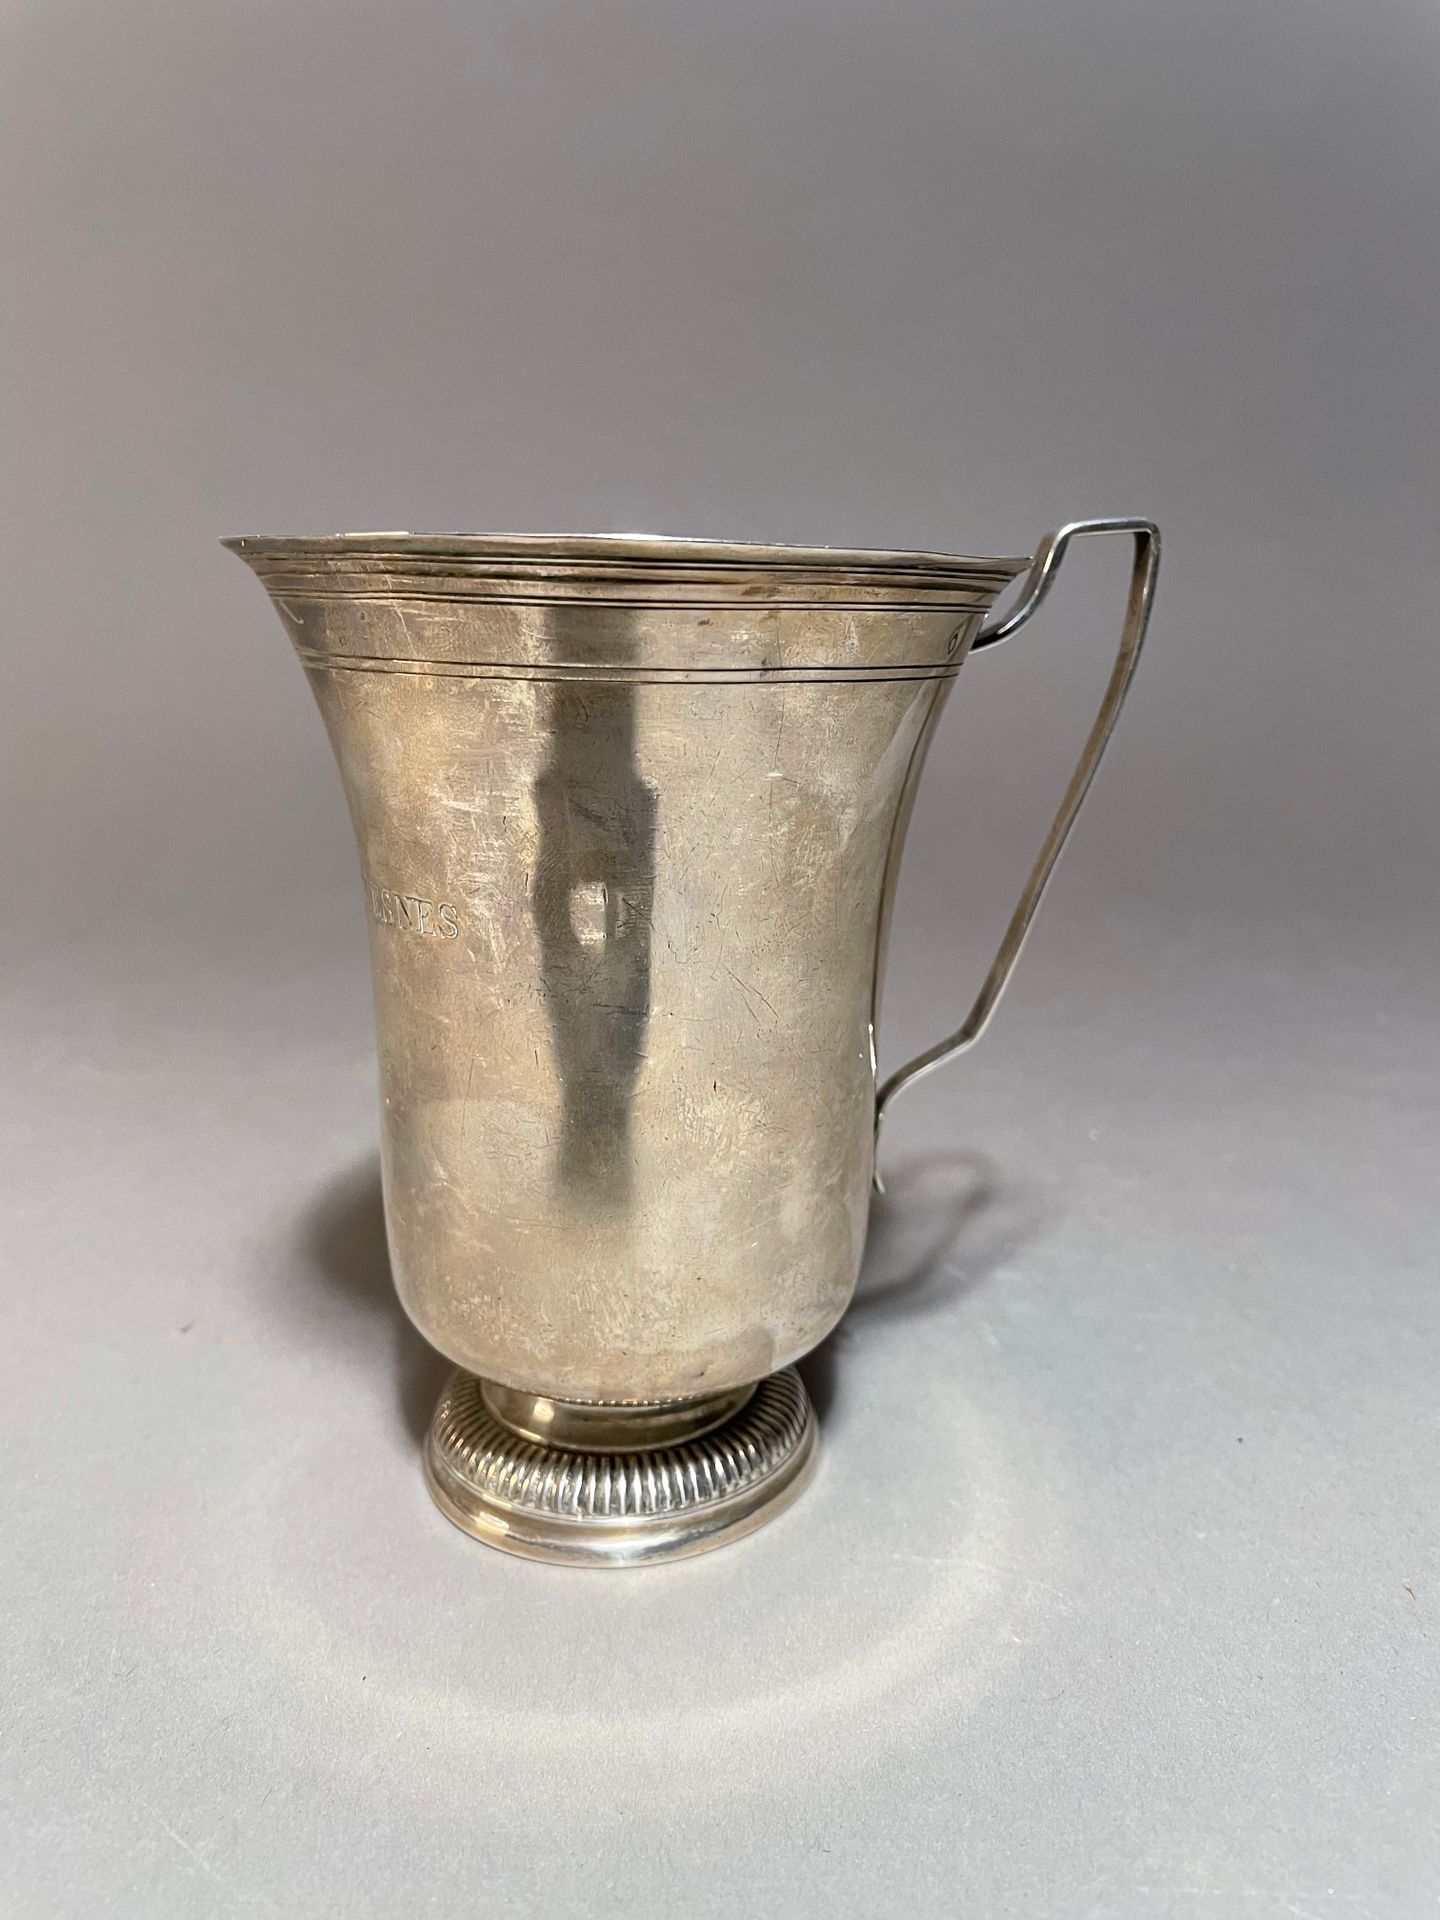 Null Tulpenförmige Timbale
Silber
XVIII. Jahrhundert
Angesetzter Henkel, zinngel&hellip;